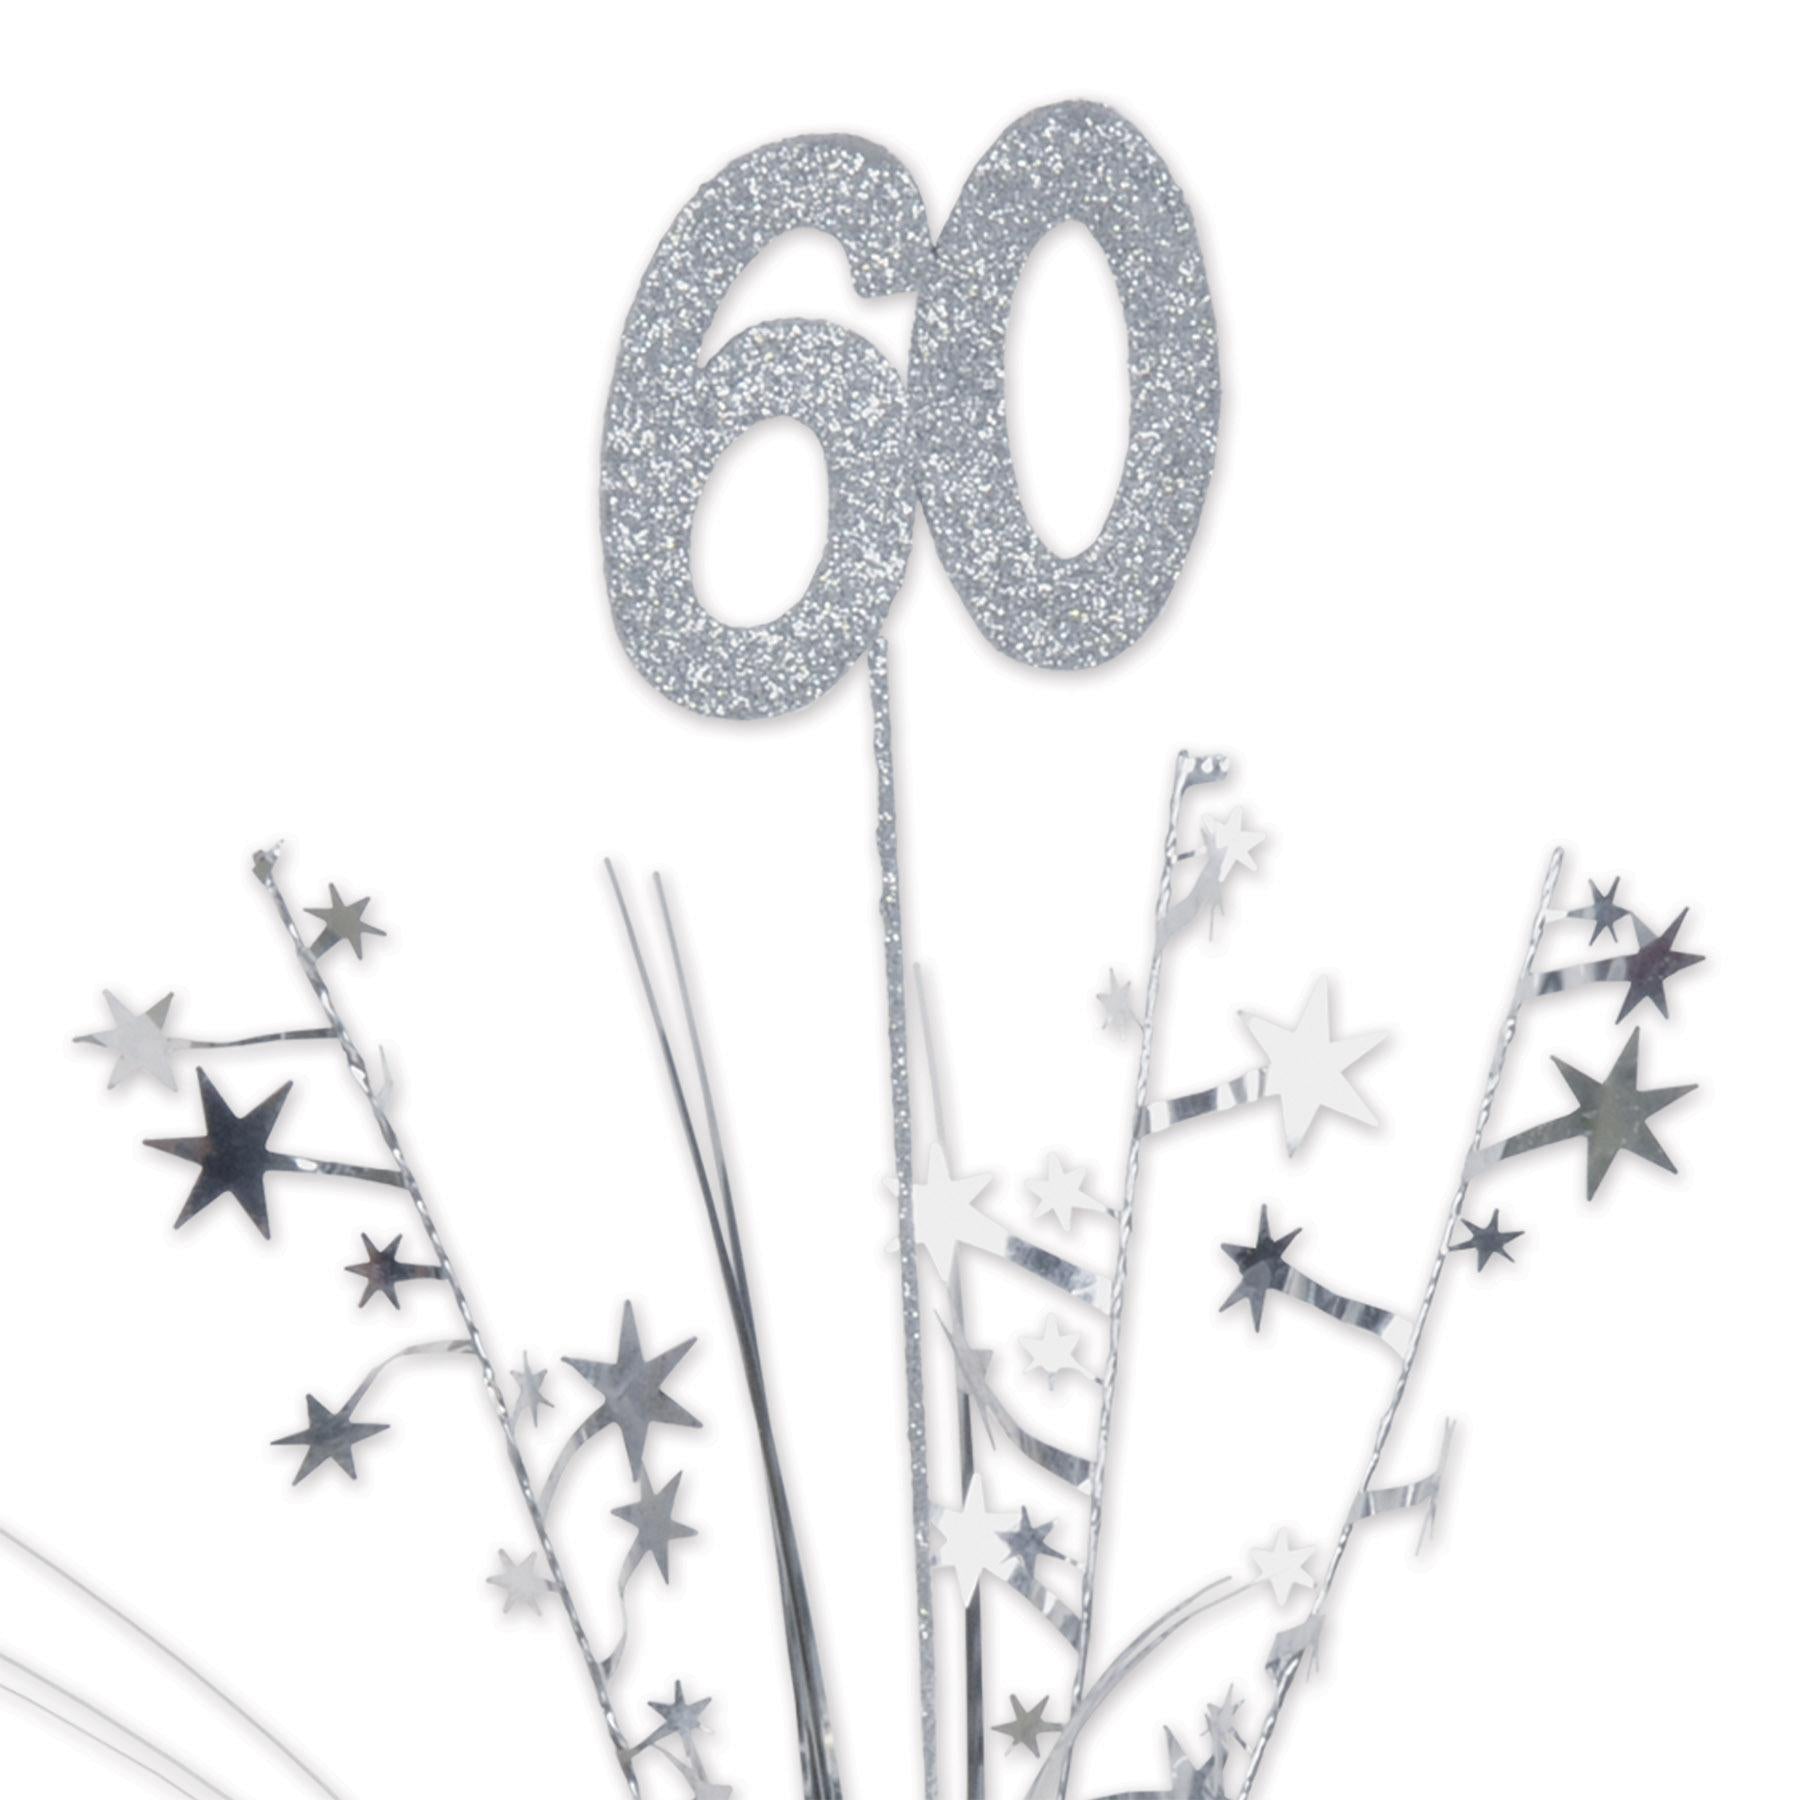 Beistle Glittered 60th Birthday Party Metallic Star Spray